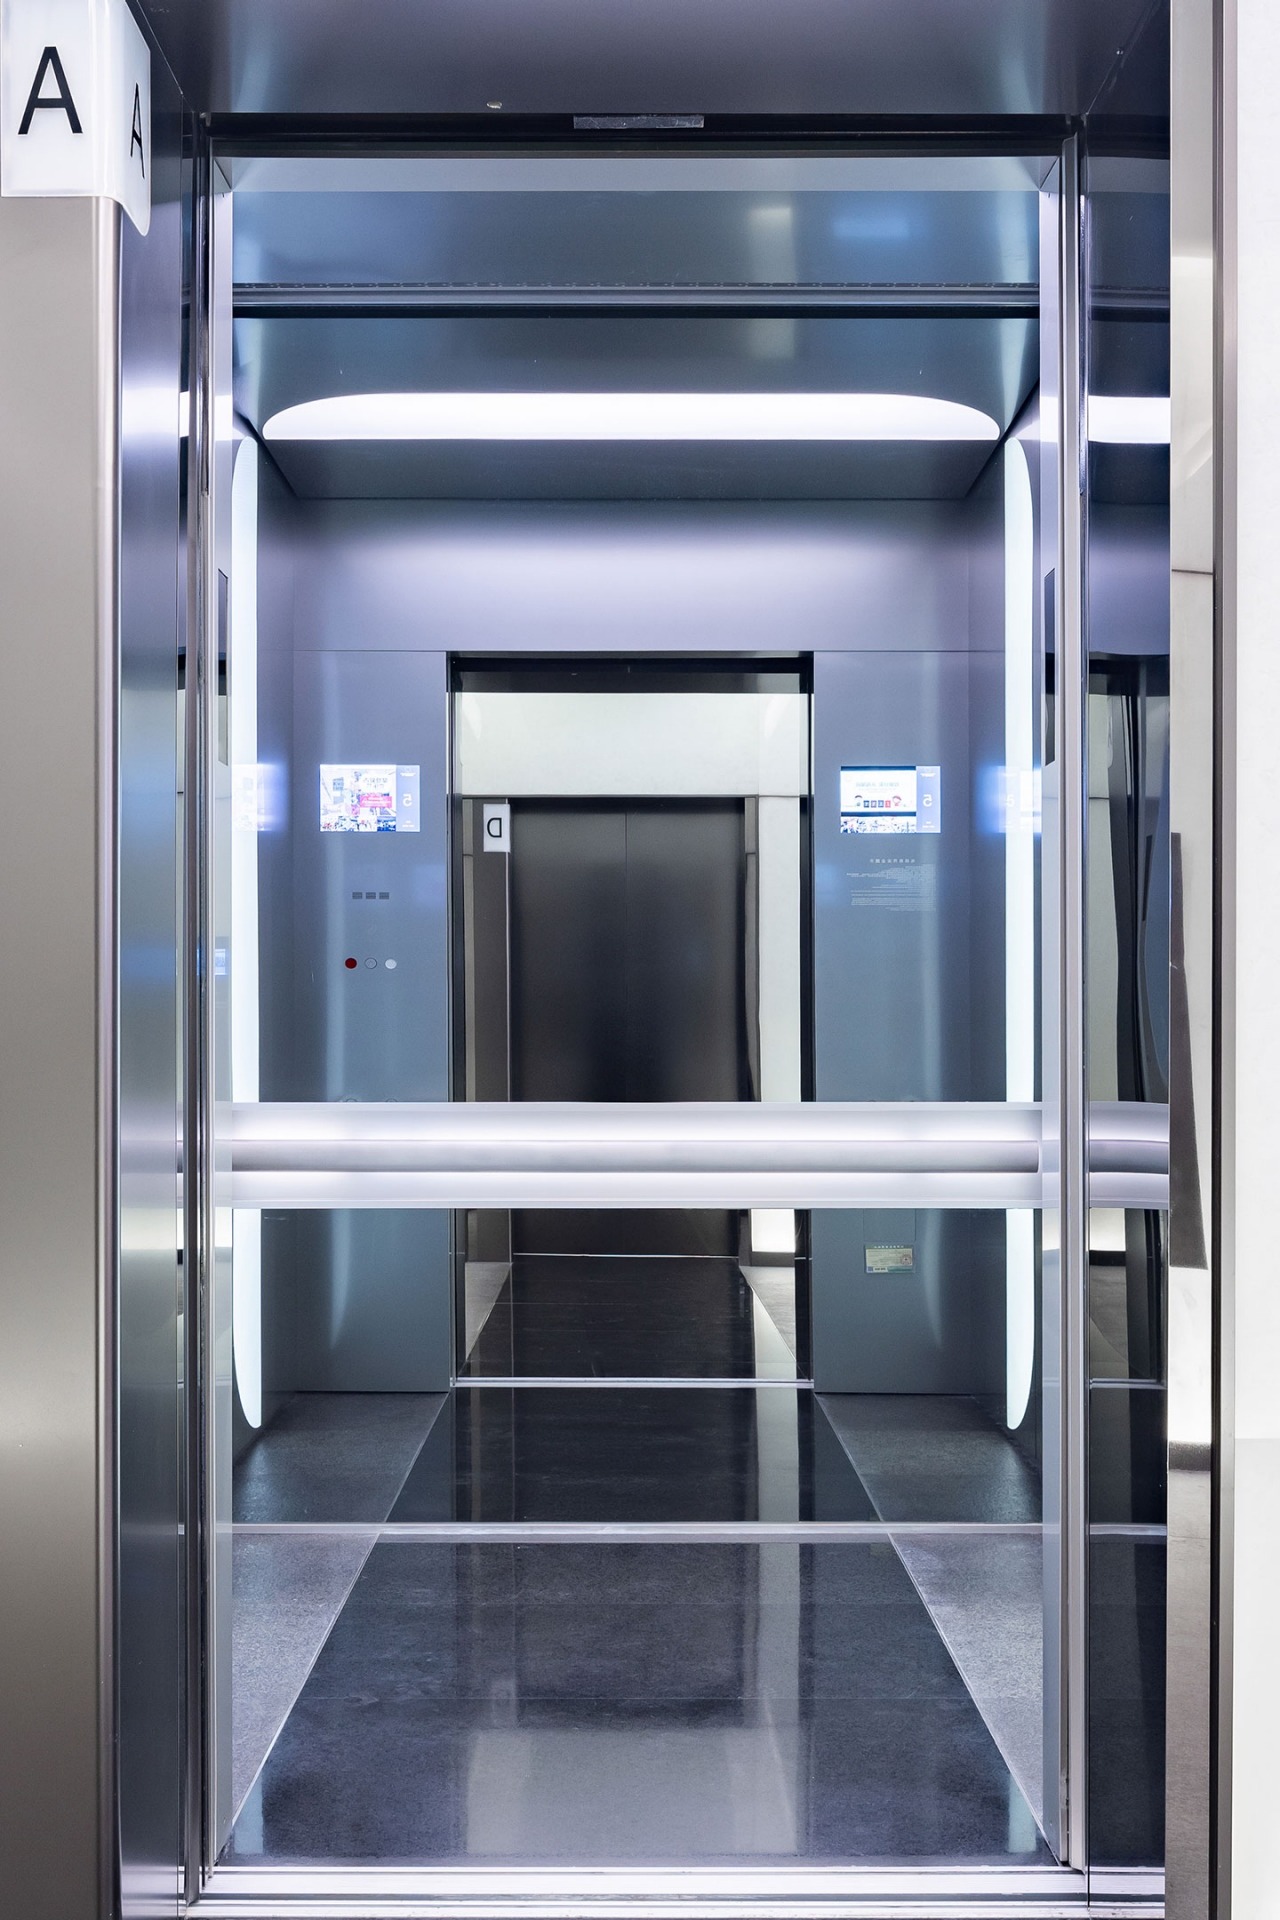 آسانسور هيدروليکي چه مزايايي دارد؟